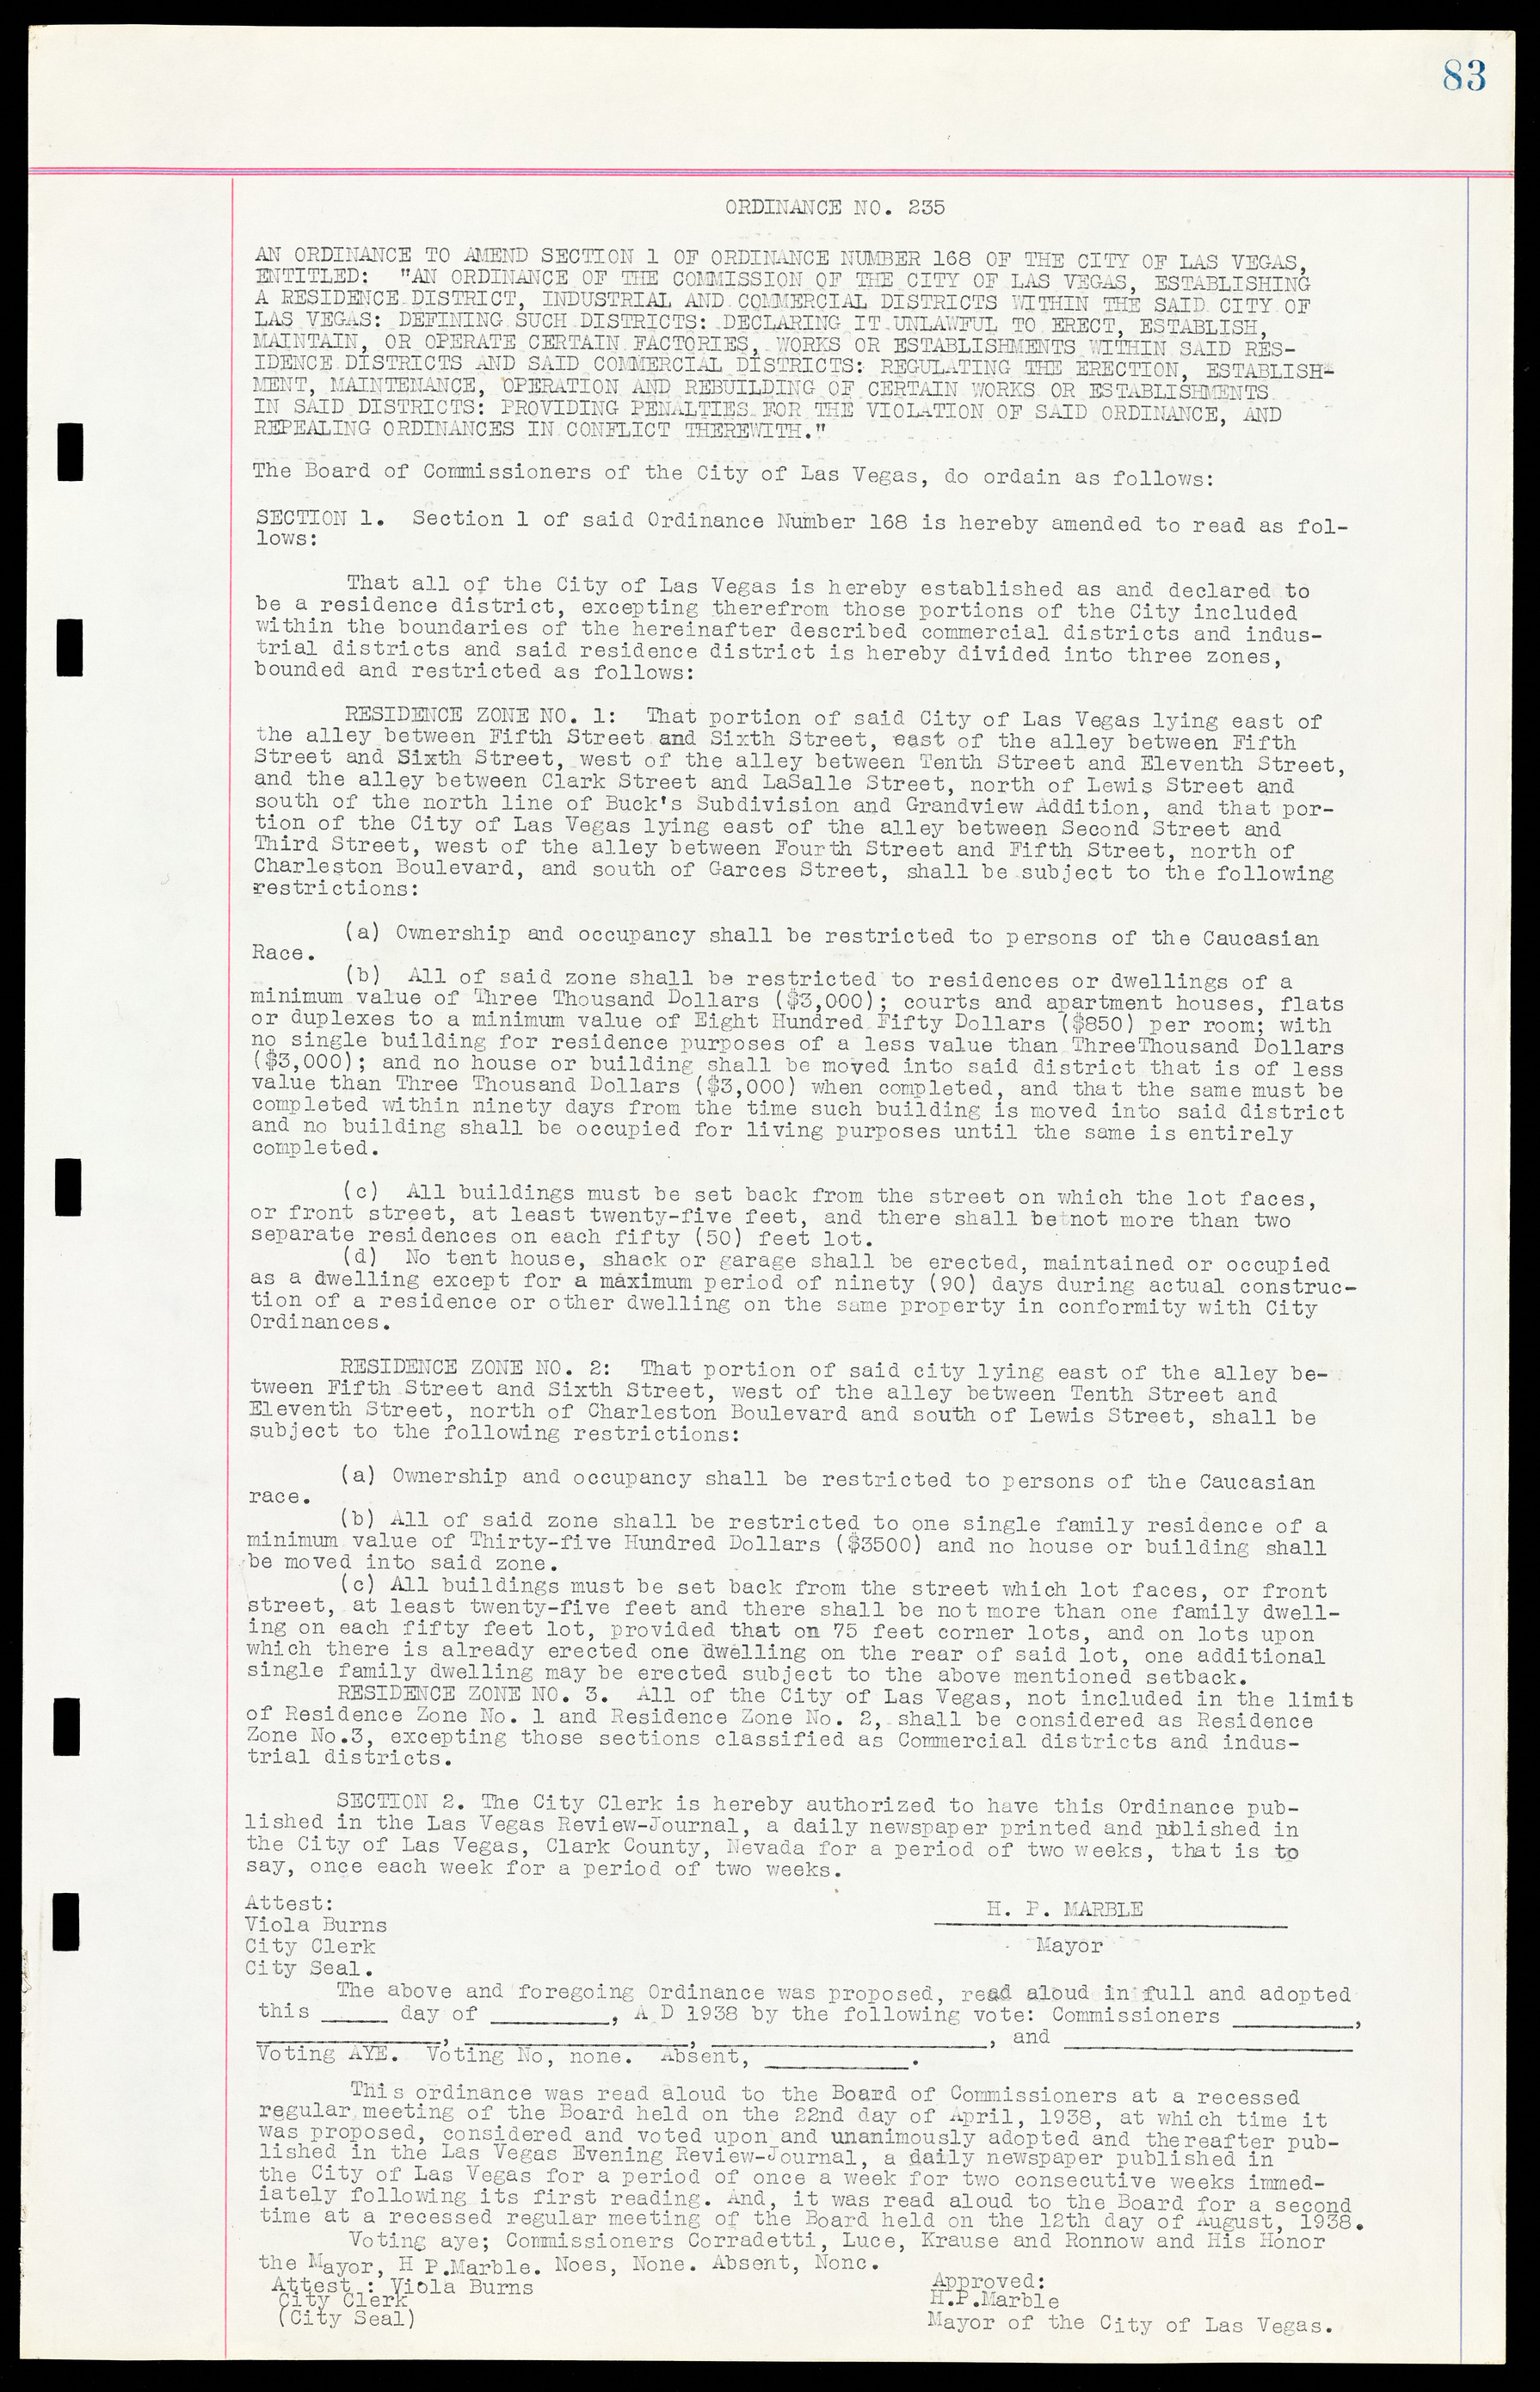 Las Vegas City Ordinances, March 31, 1933 to October 25, 1950, lvc000014-101